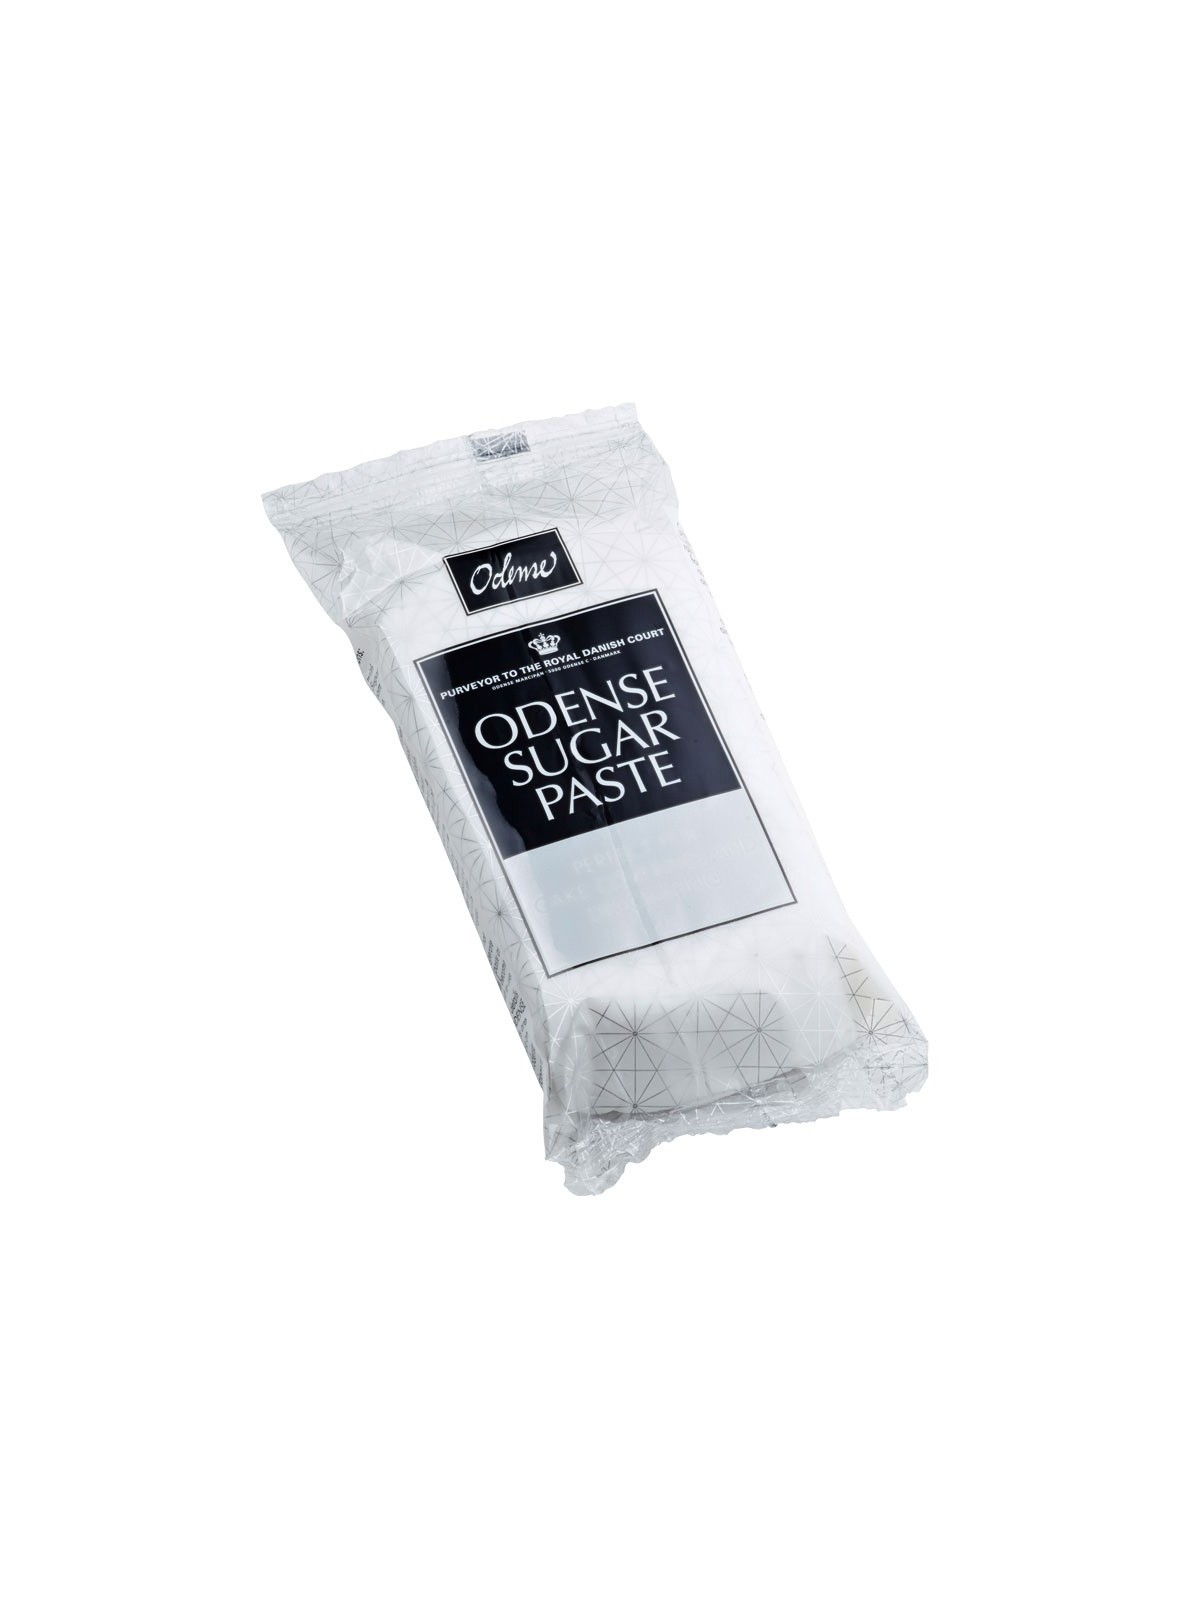 Odense  Sugar paste - white - 250g